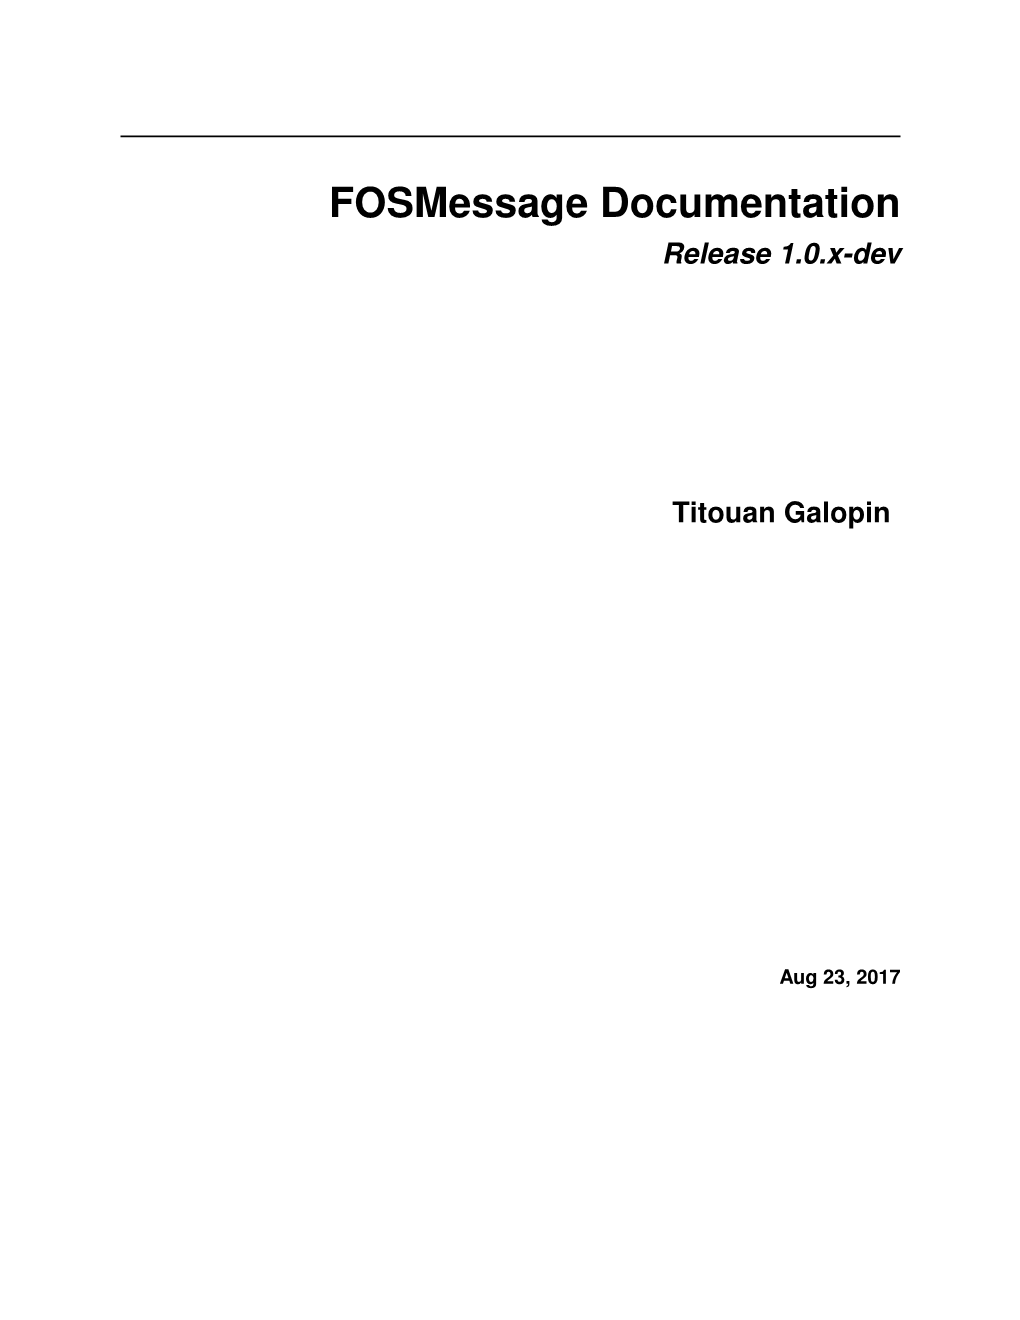 Fosmessage Documentation Release 1.0.X-Dev